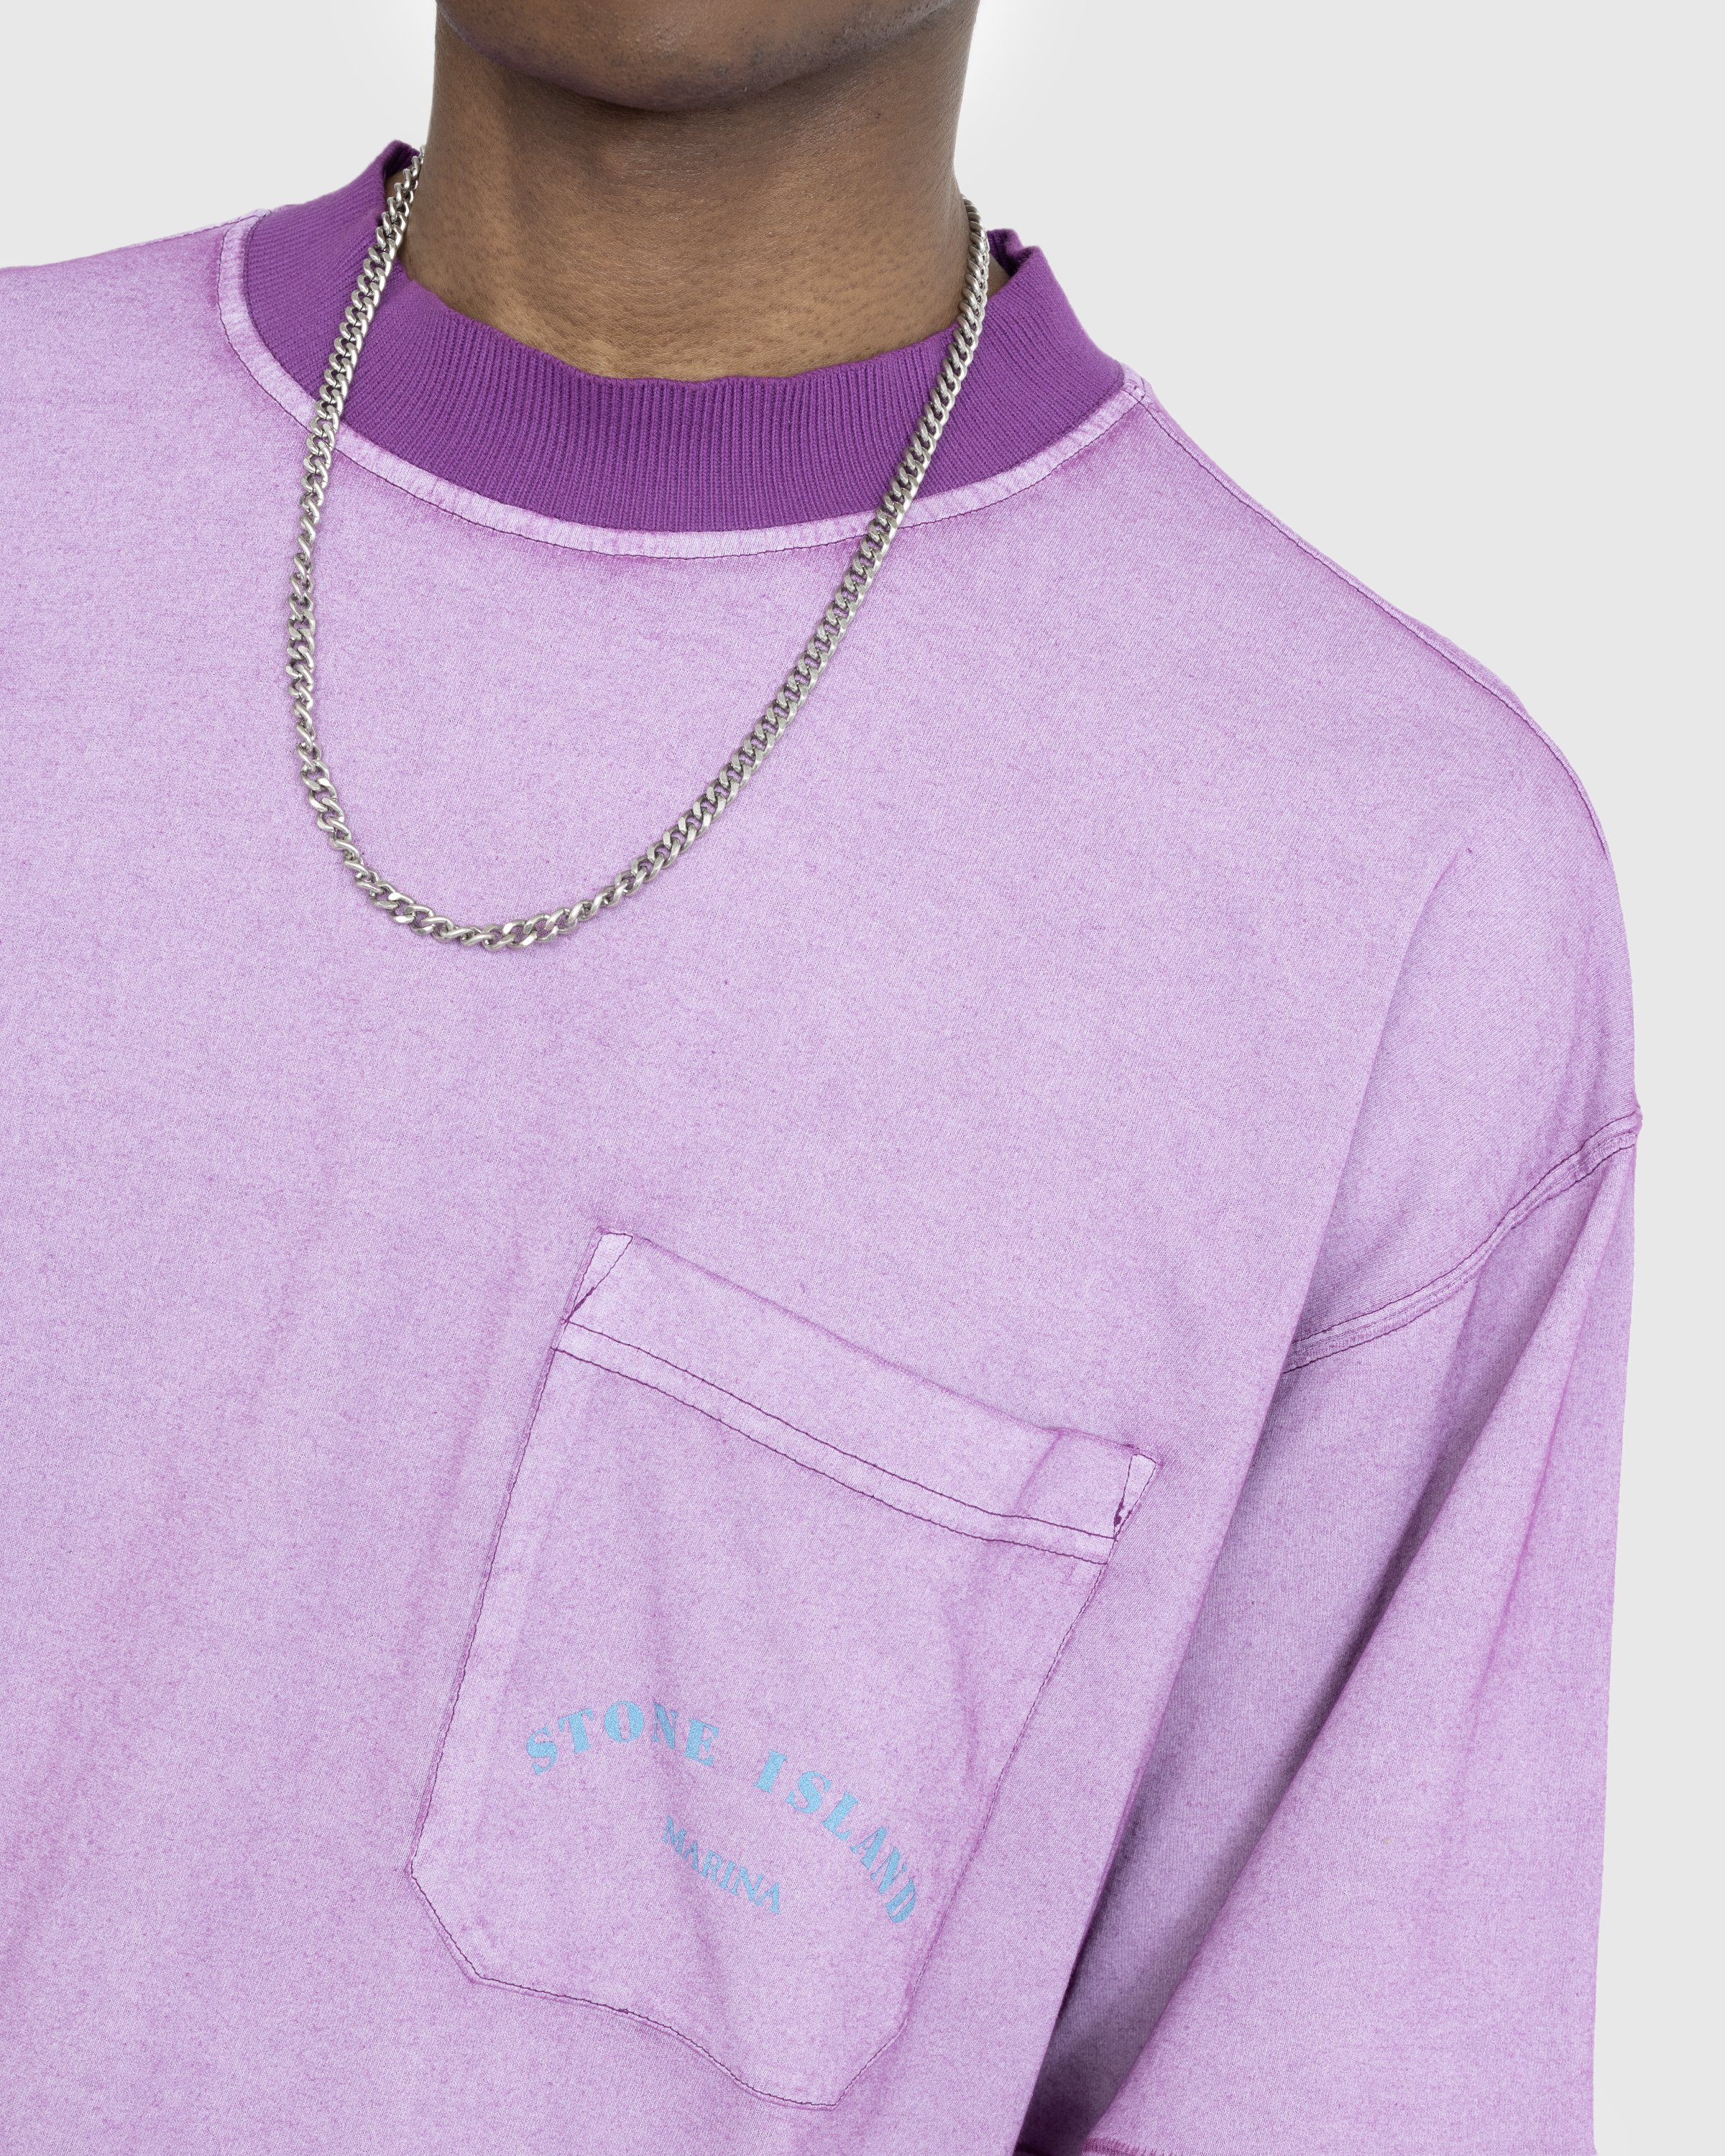 Stone Island - T-Shirt Pink 216X4 - Clothing - Pink - Image 4